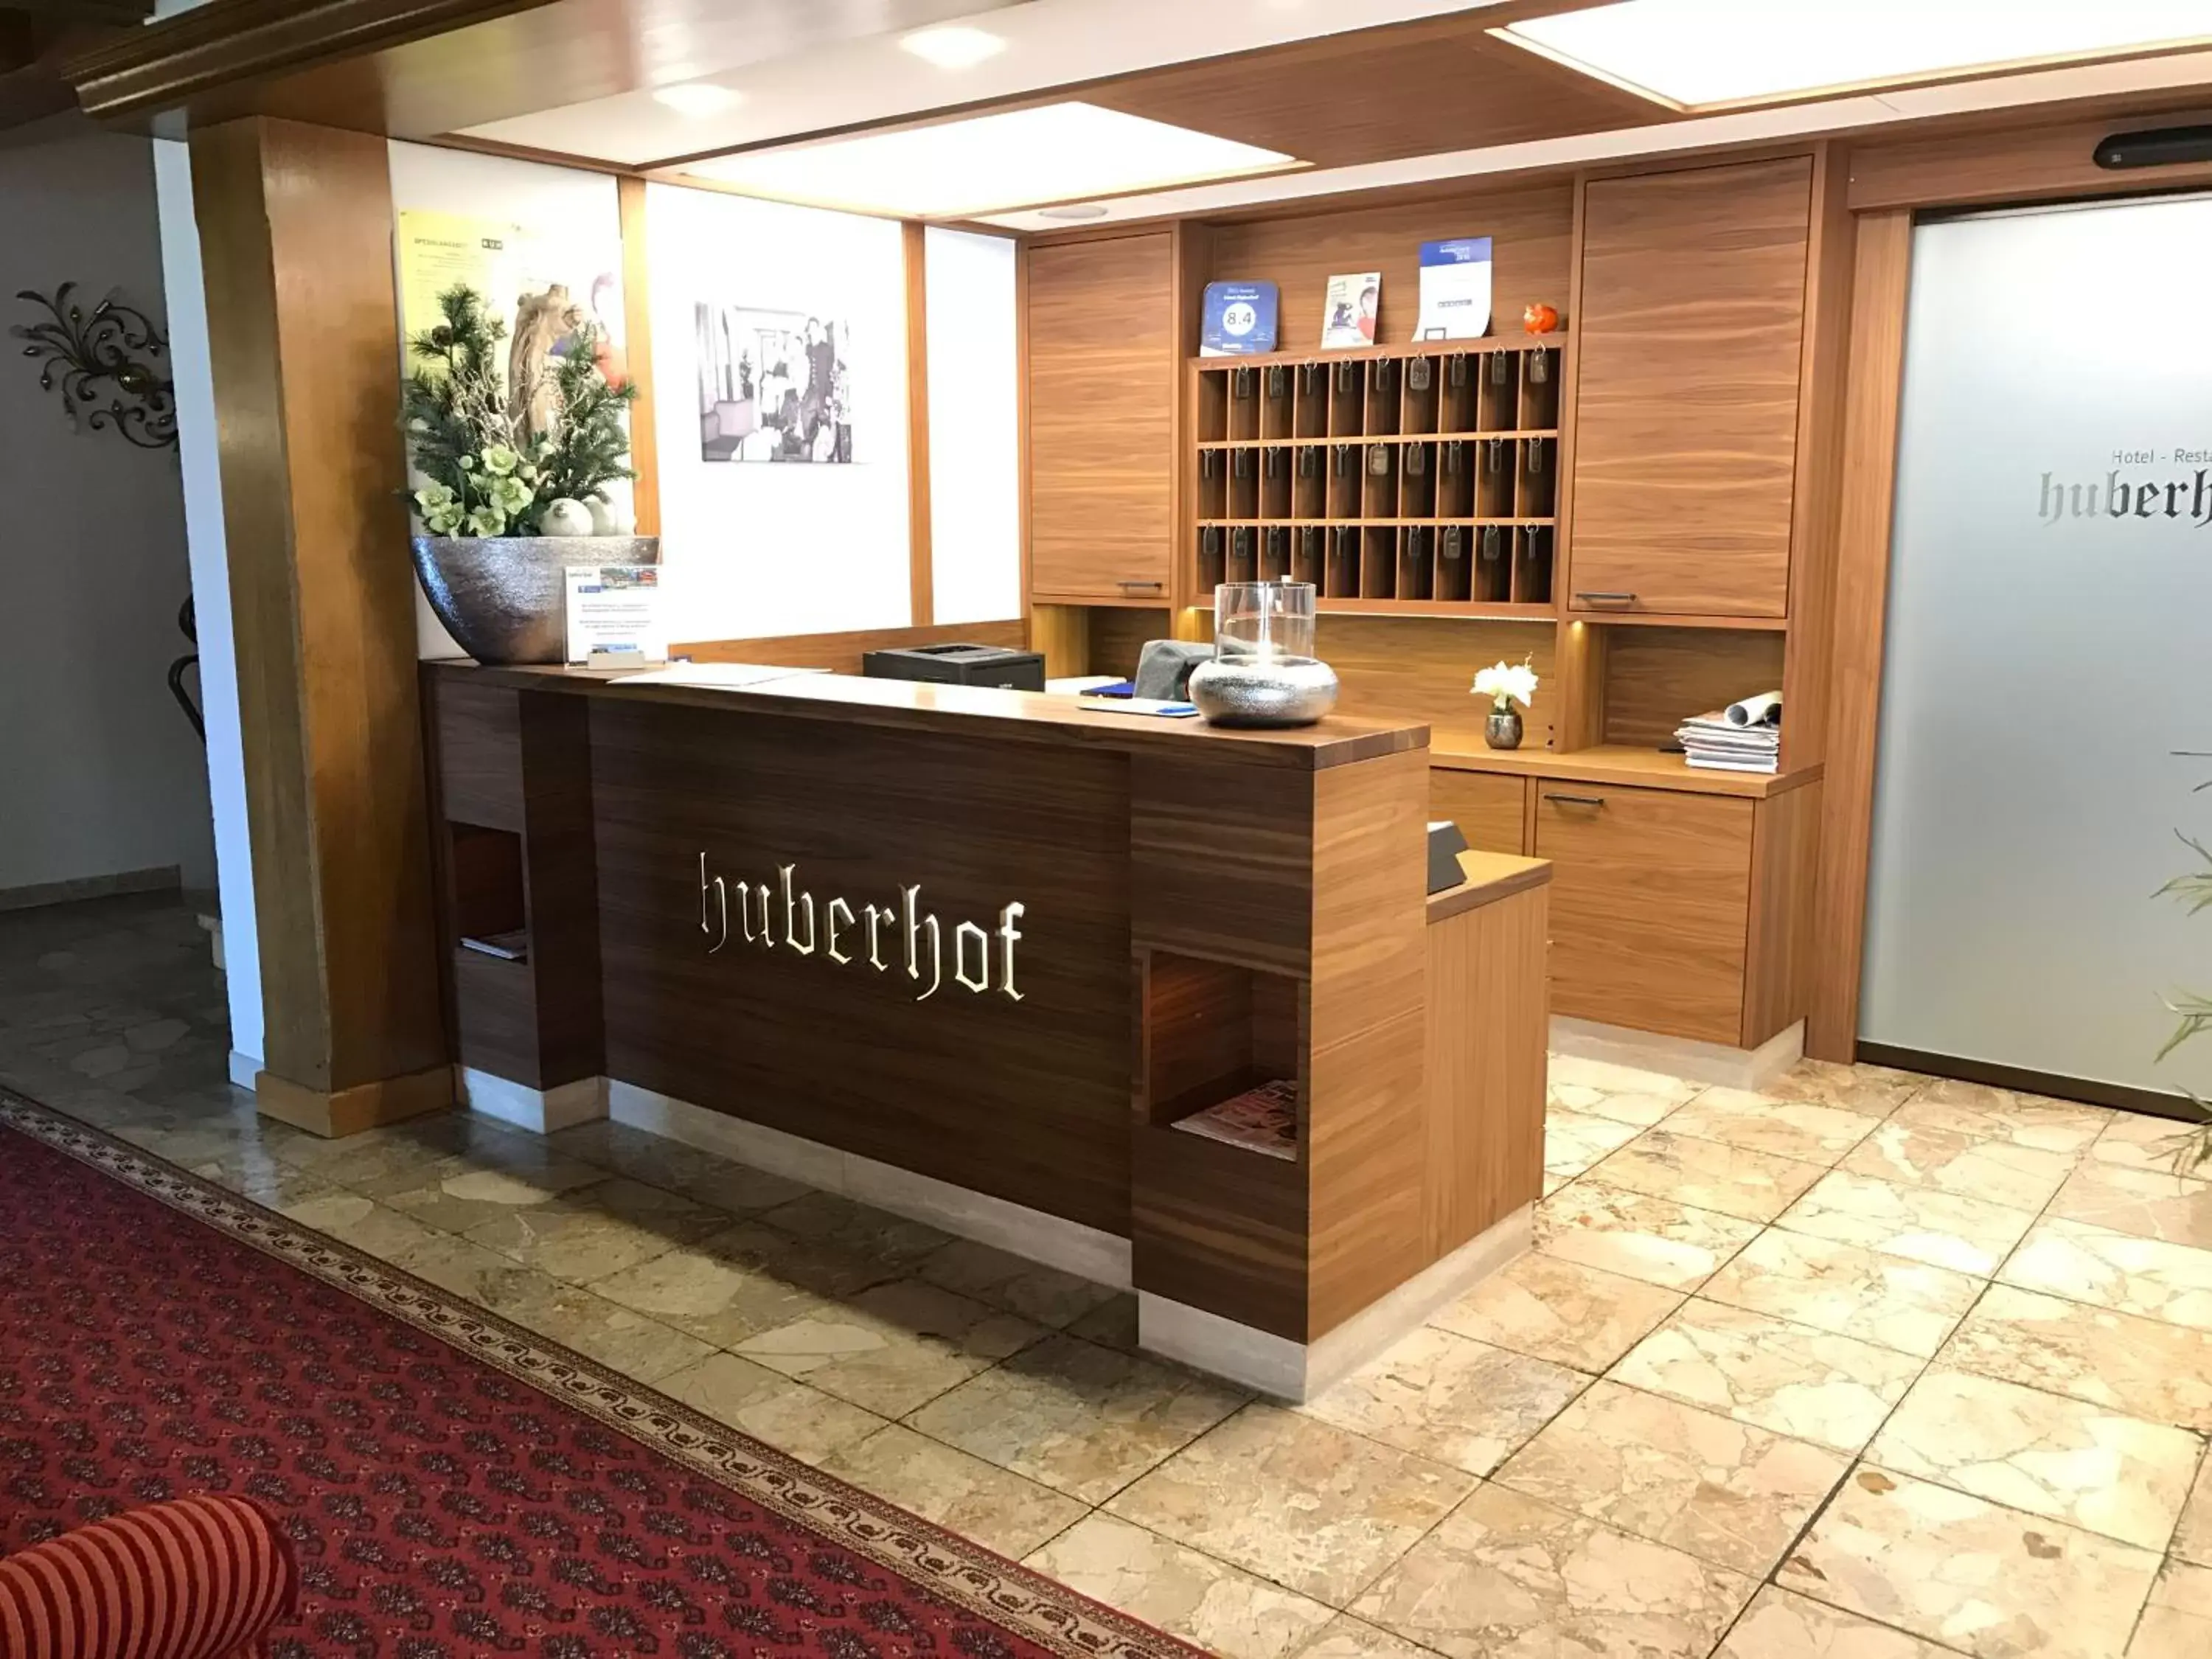 Lobby or reception in Hotel Huberhof